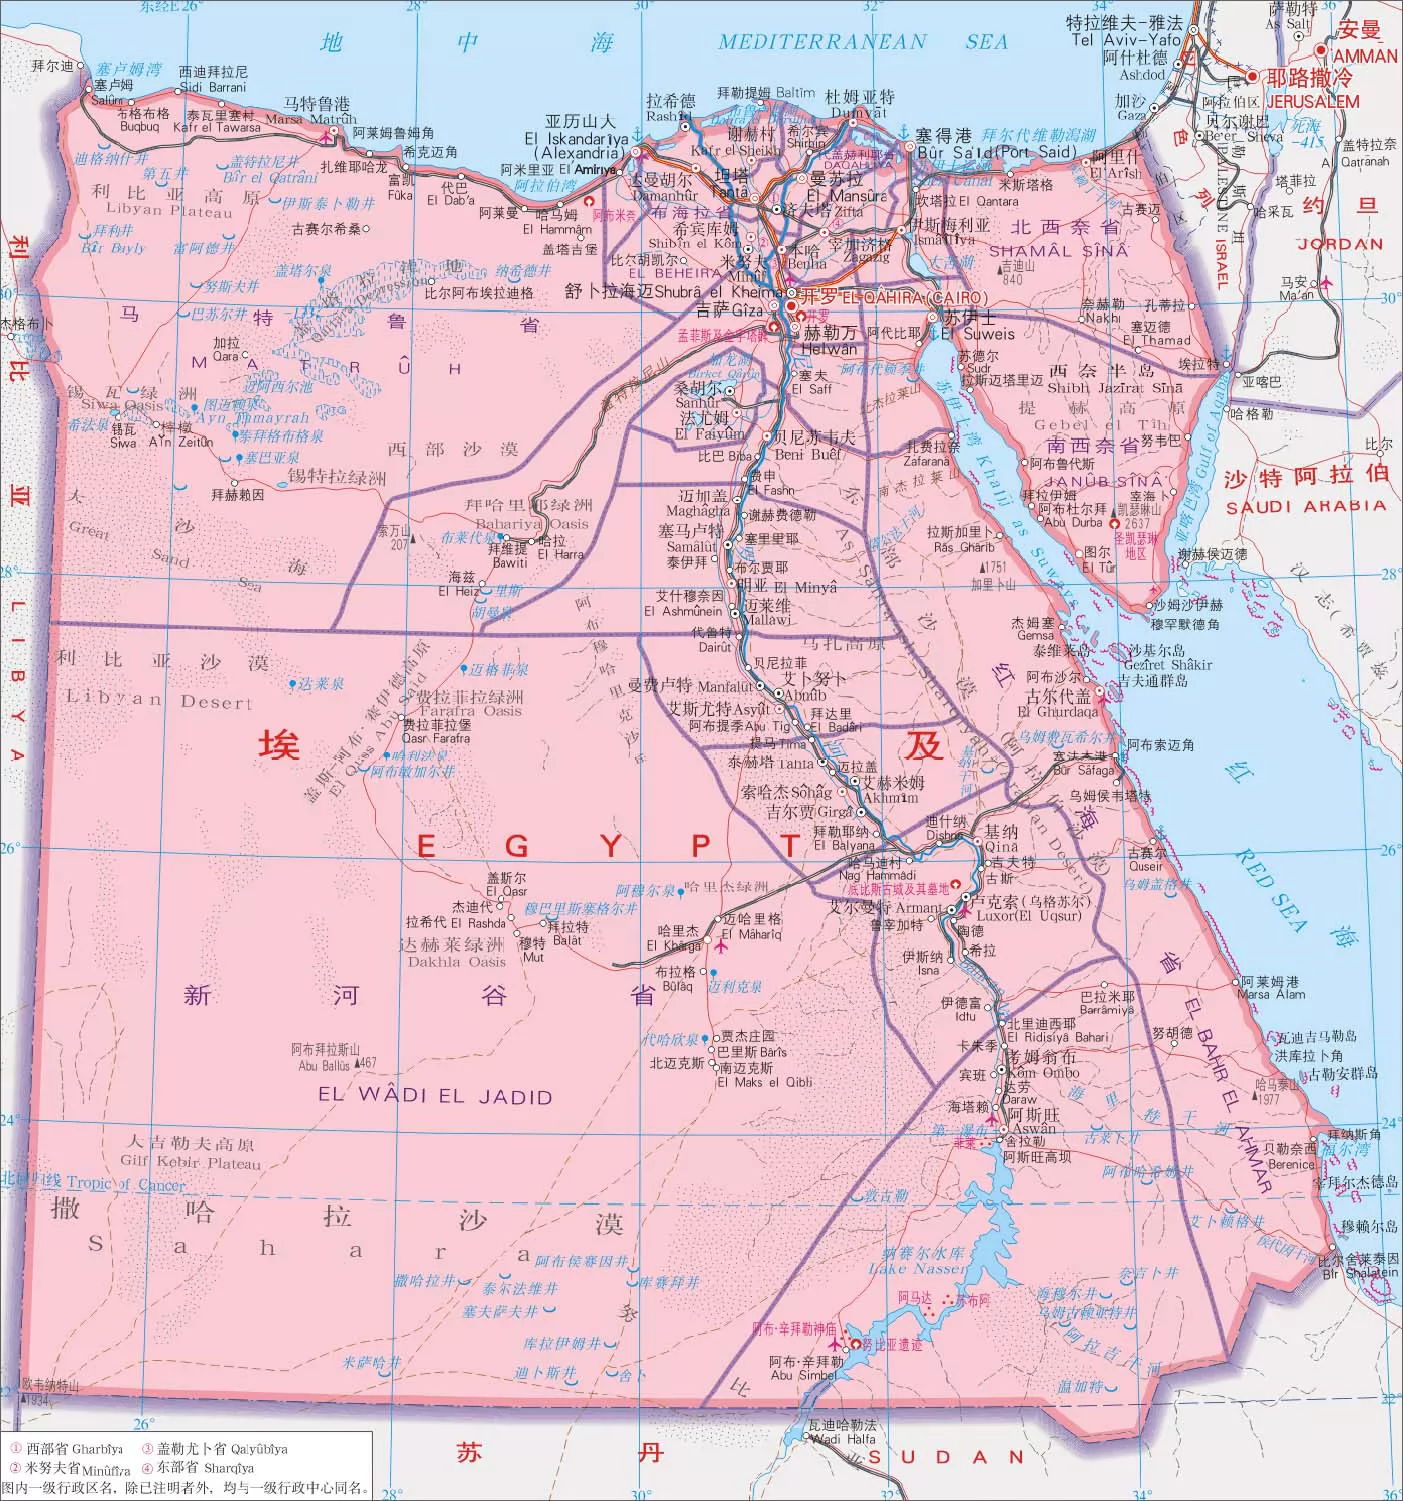 Egypt Satellite Image - MapSof.net